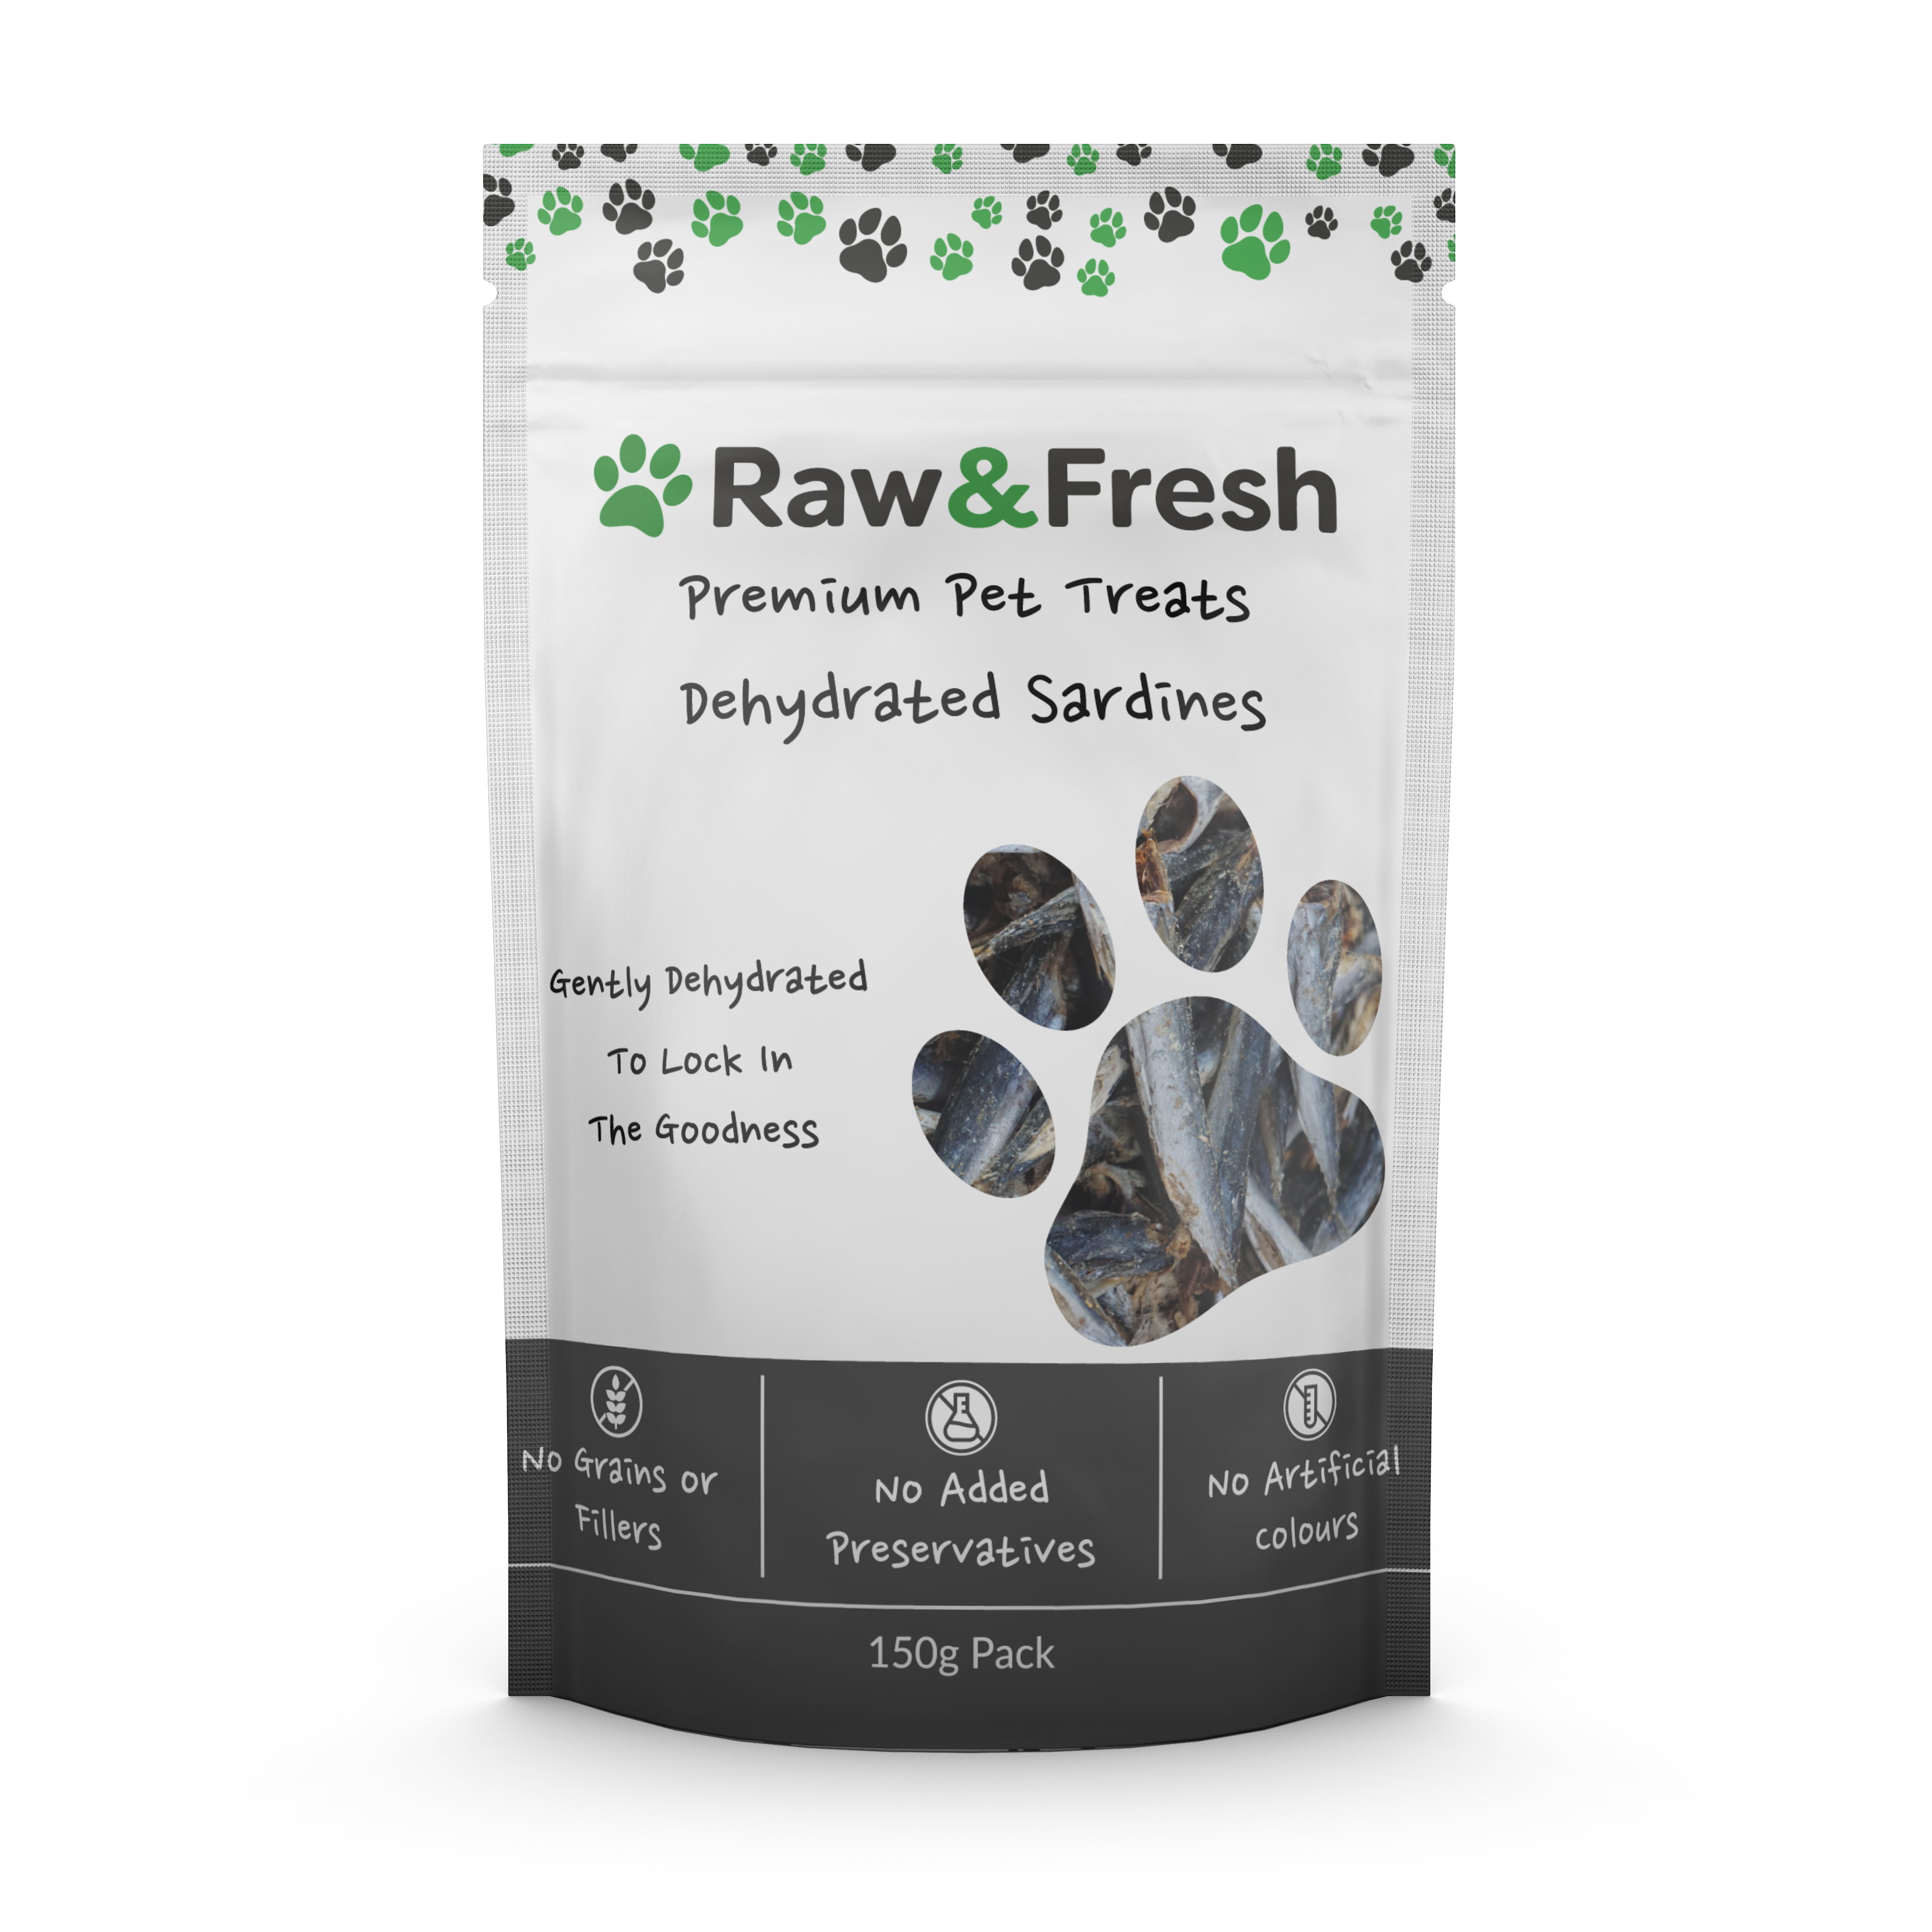 Raw & Fresh Dehydrated Whole Sardines Dog Treats 150g Pack